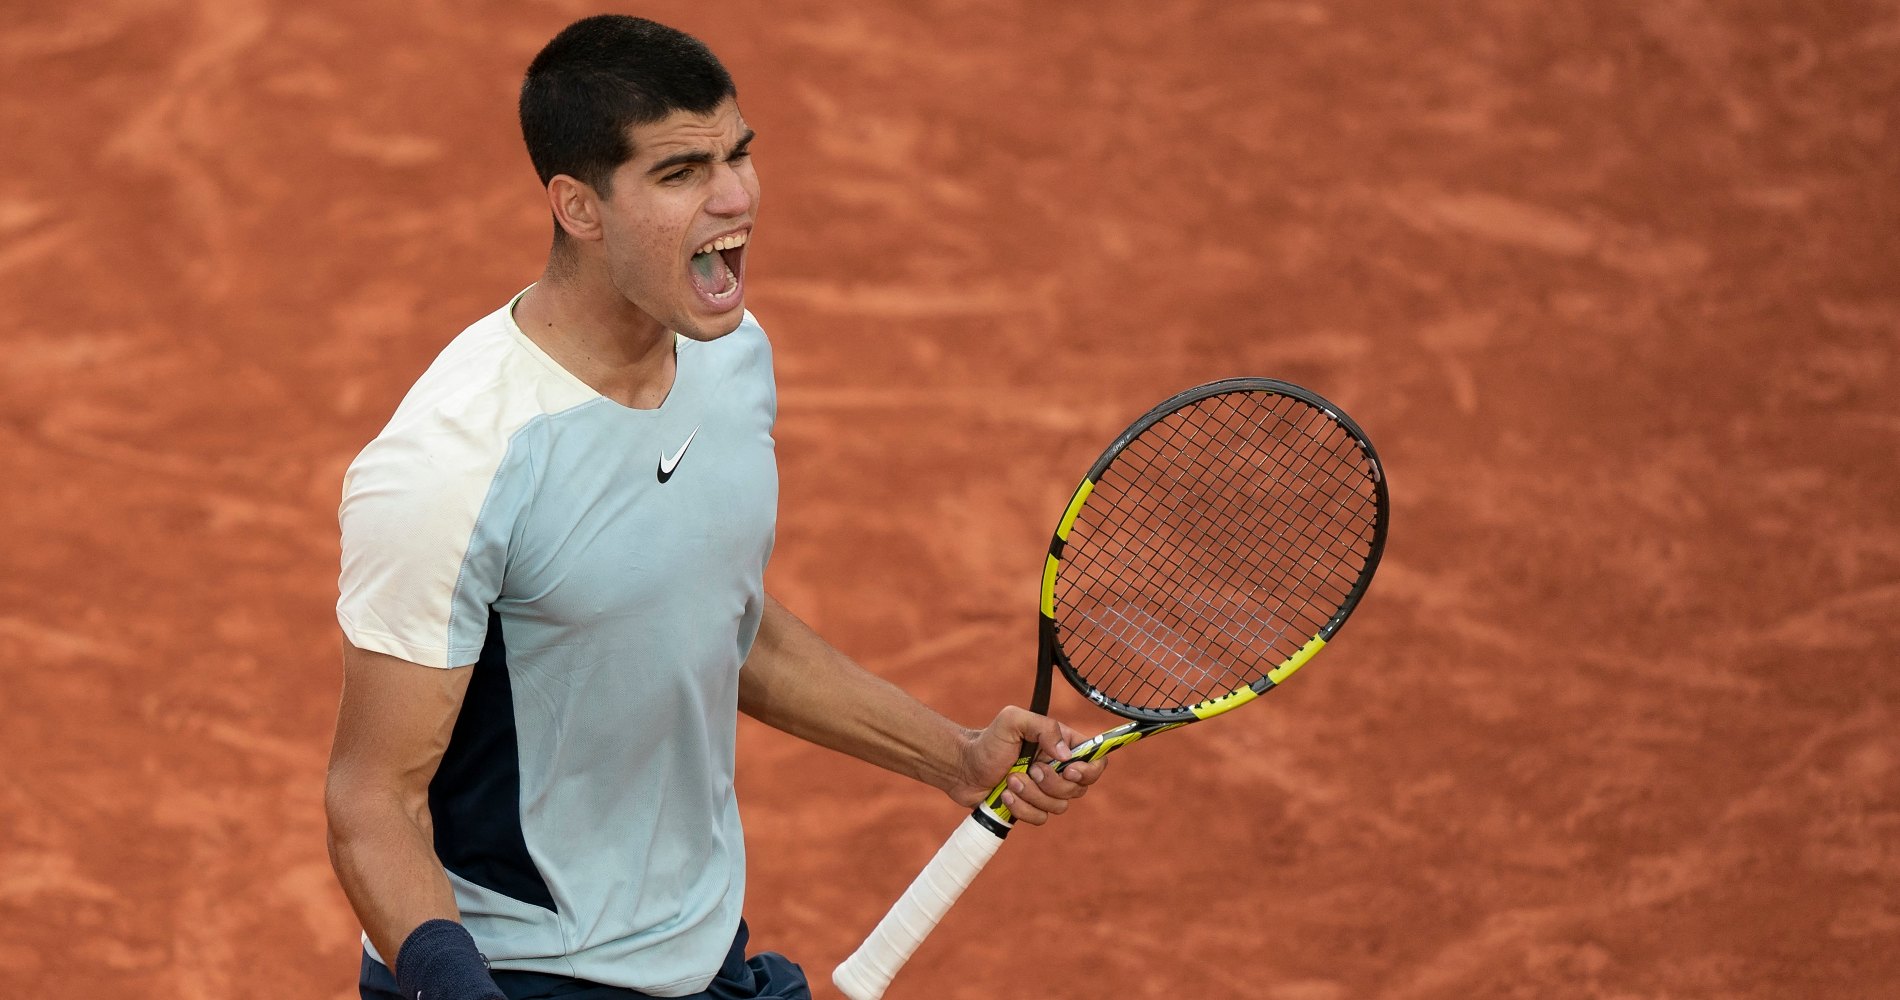 He's a human highlight reel': the star power of tennis player Carlos Alcaraz, Carlos Alcaraz